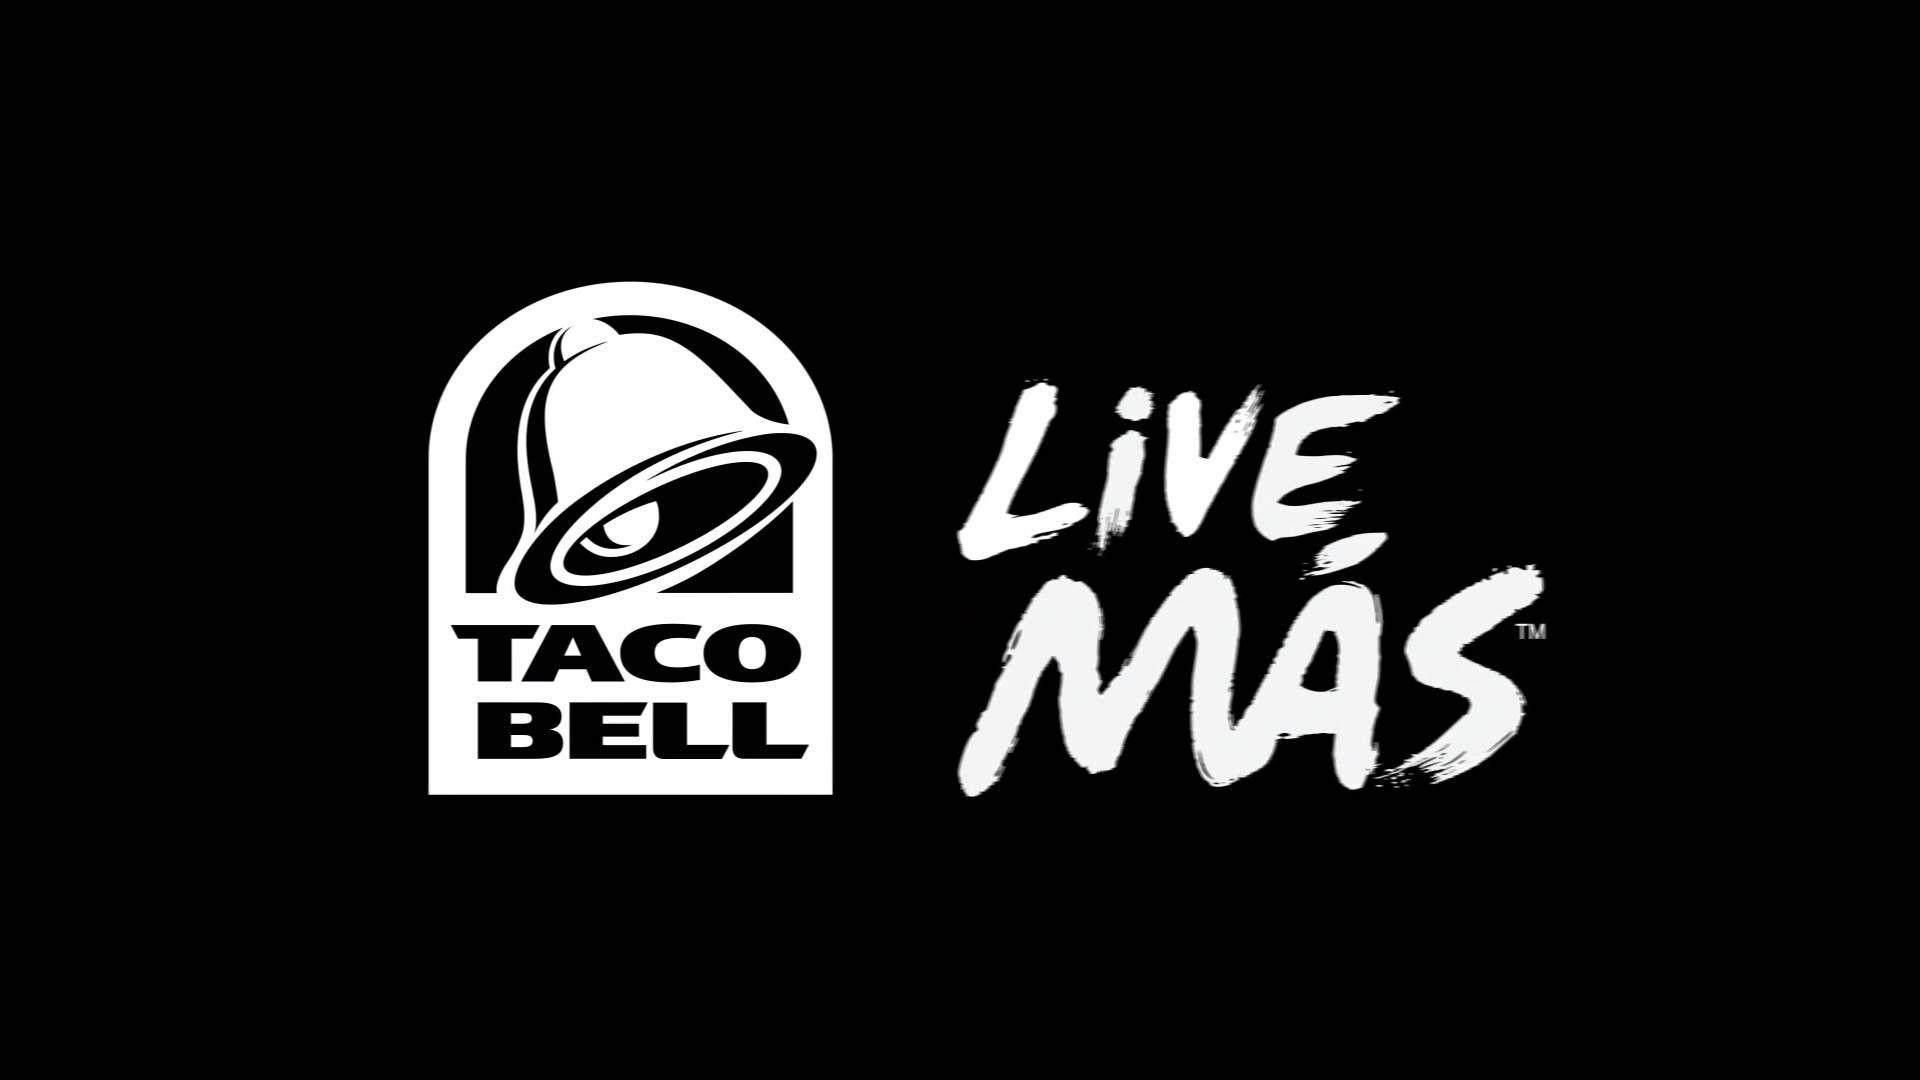 Taco Bell Live Mas Logo Wallpapers 62672 1920x1080 px ~ HDWallSource